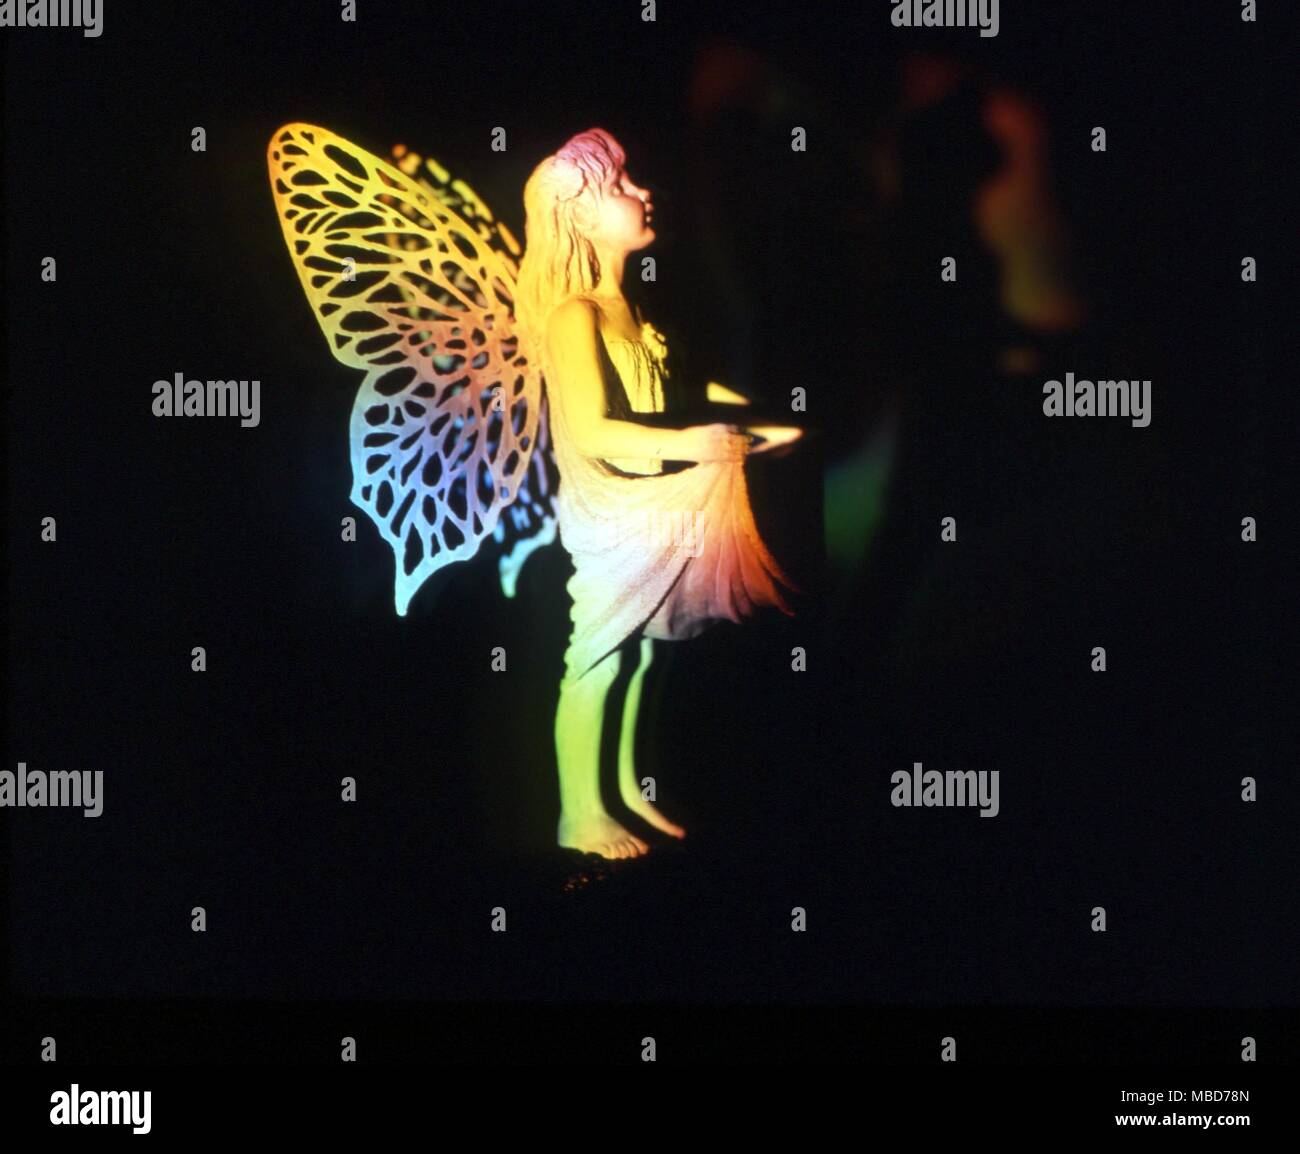 Fairies - Ethereal flower fairy against a dark background Stock Photo